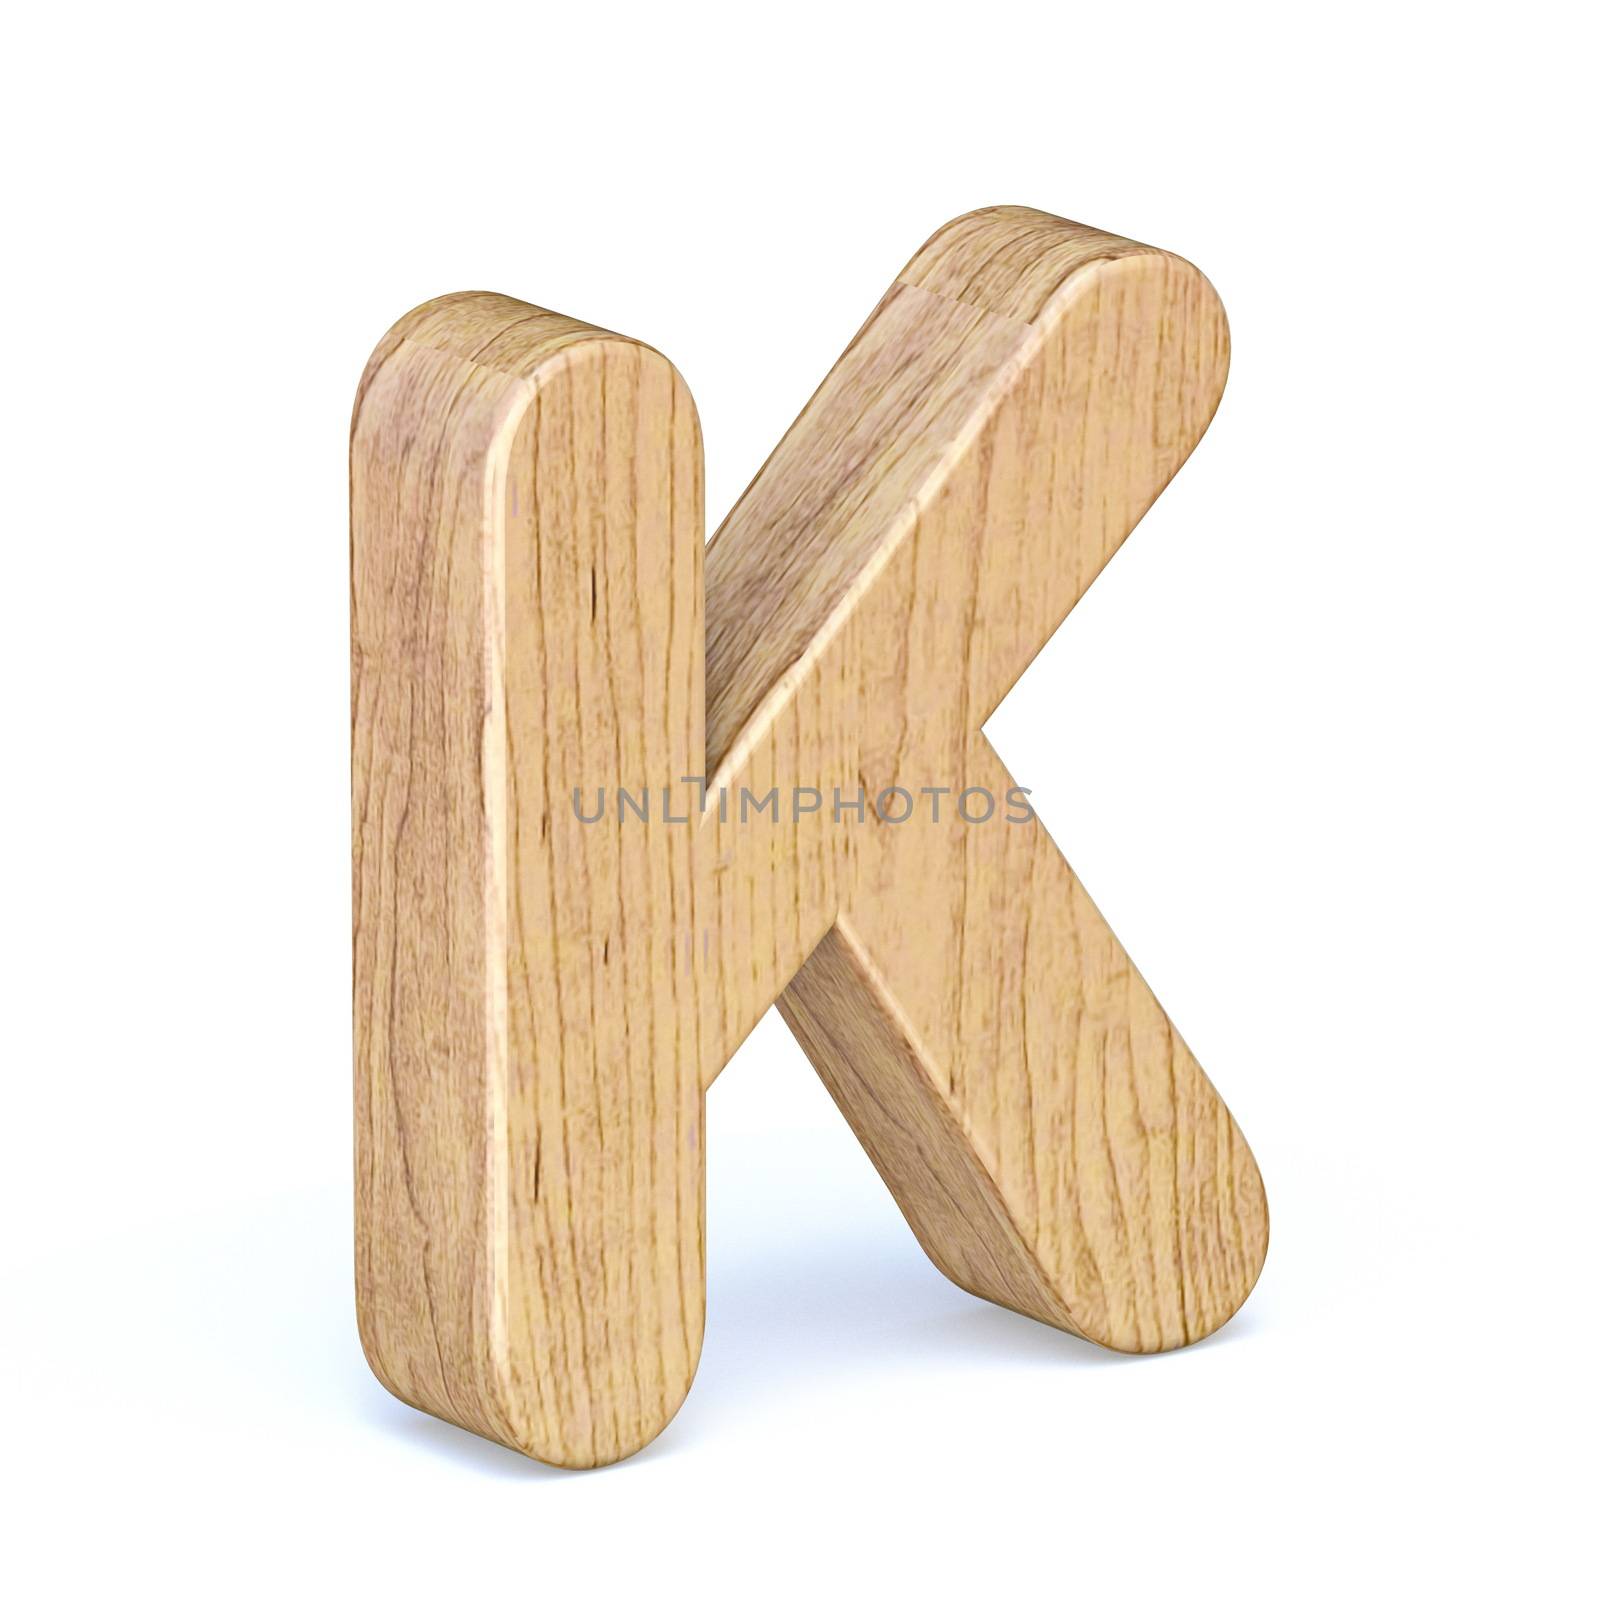 Rounded wooden font Letter K 3D render illustration isolated on white background